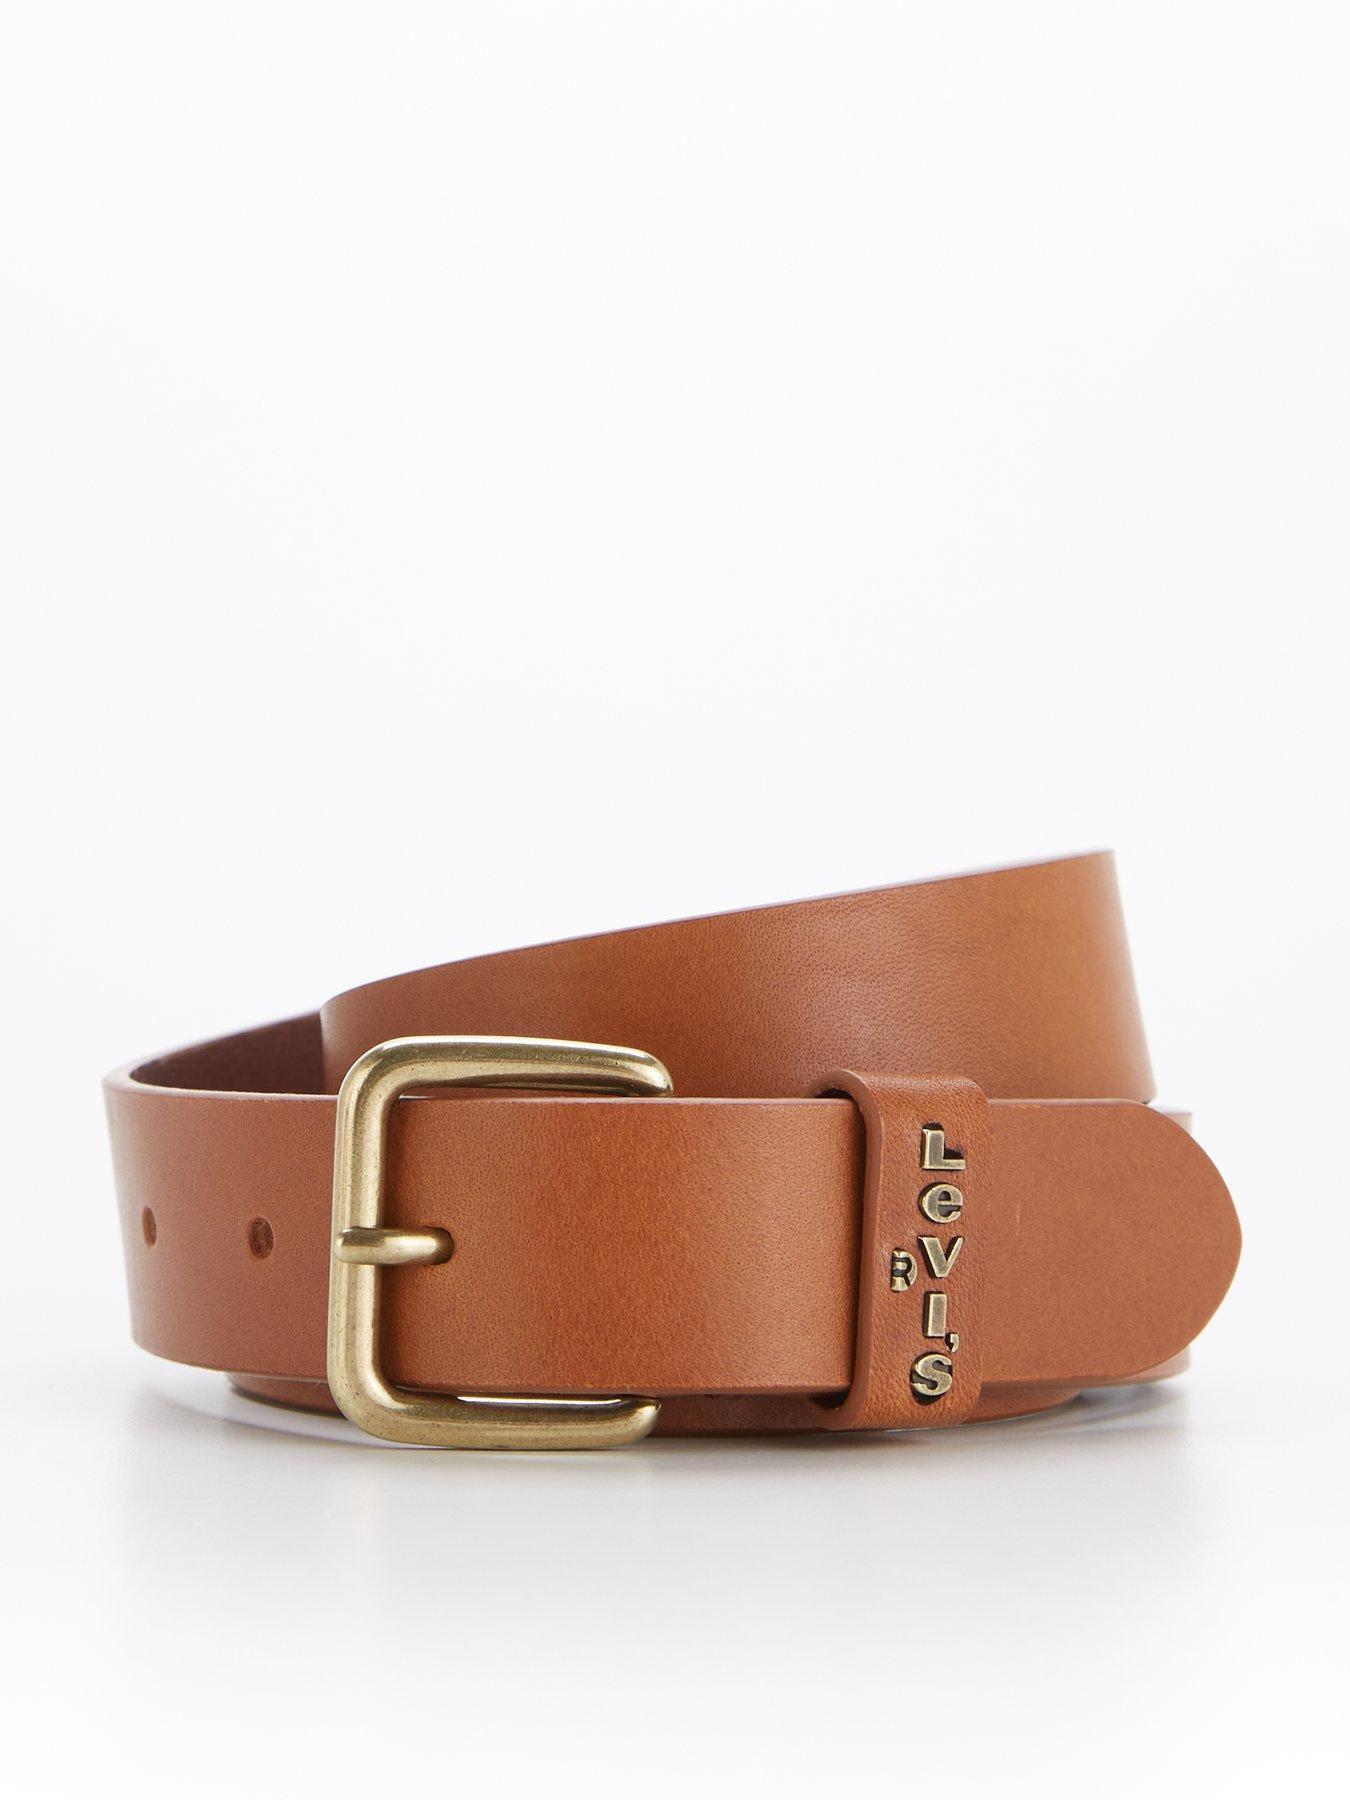 Levi's Calypso Leather Belt - Tan | Very.co.uk